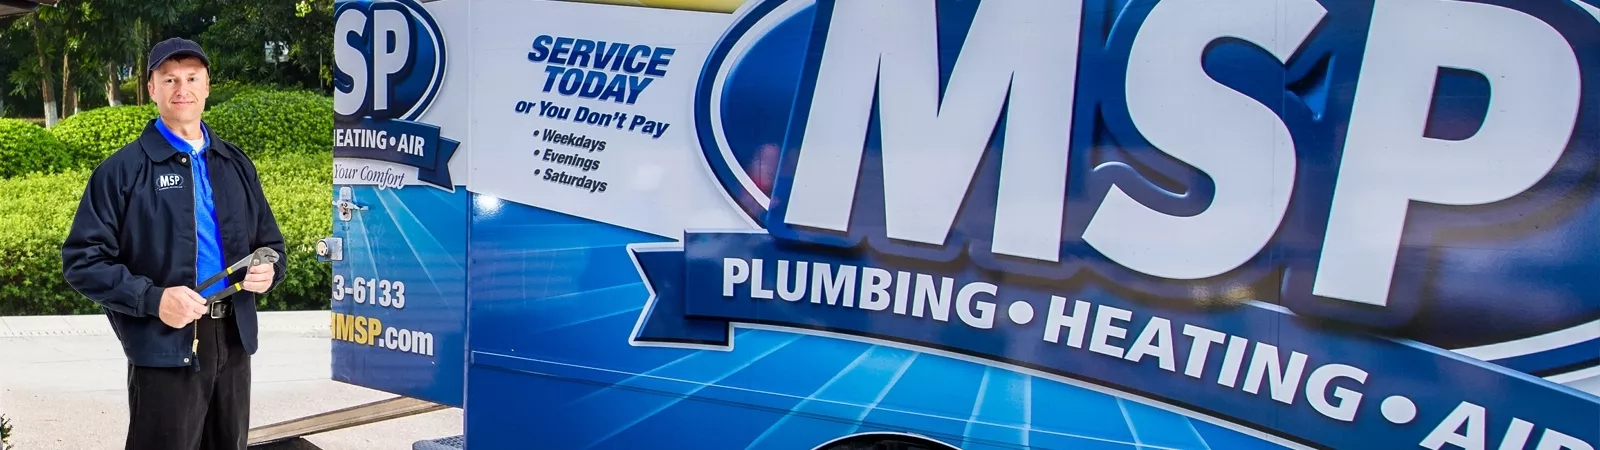 plumber 24 hours minneapolis Minneapolis Saint Paul Plumbing Heating Air